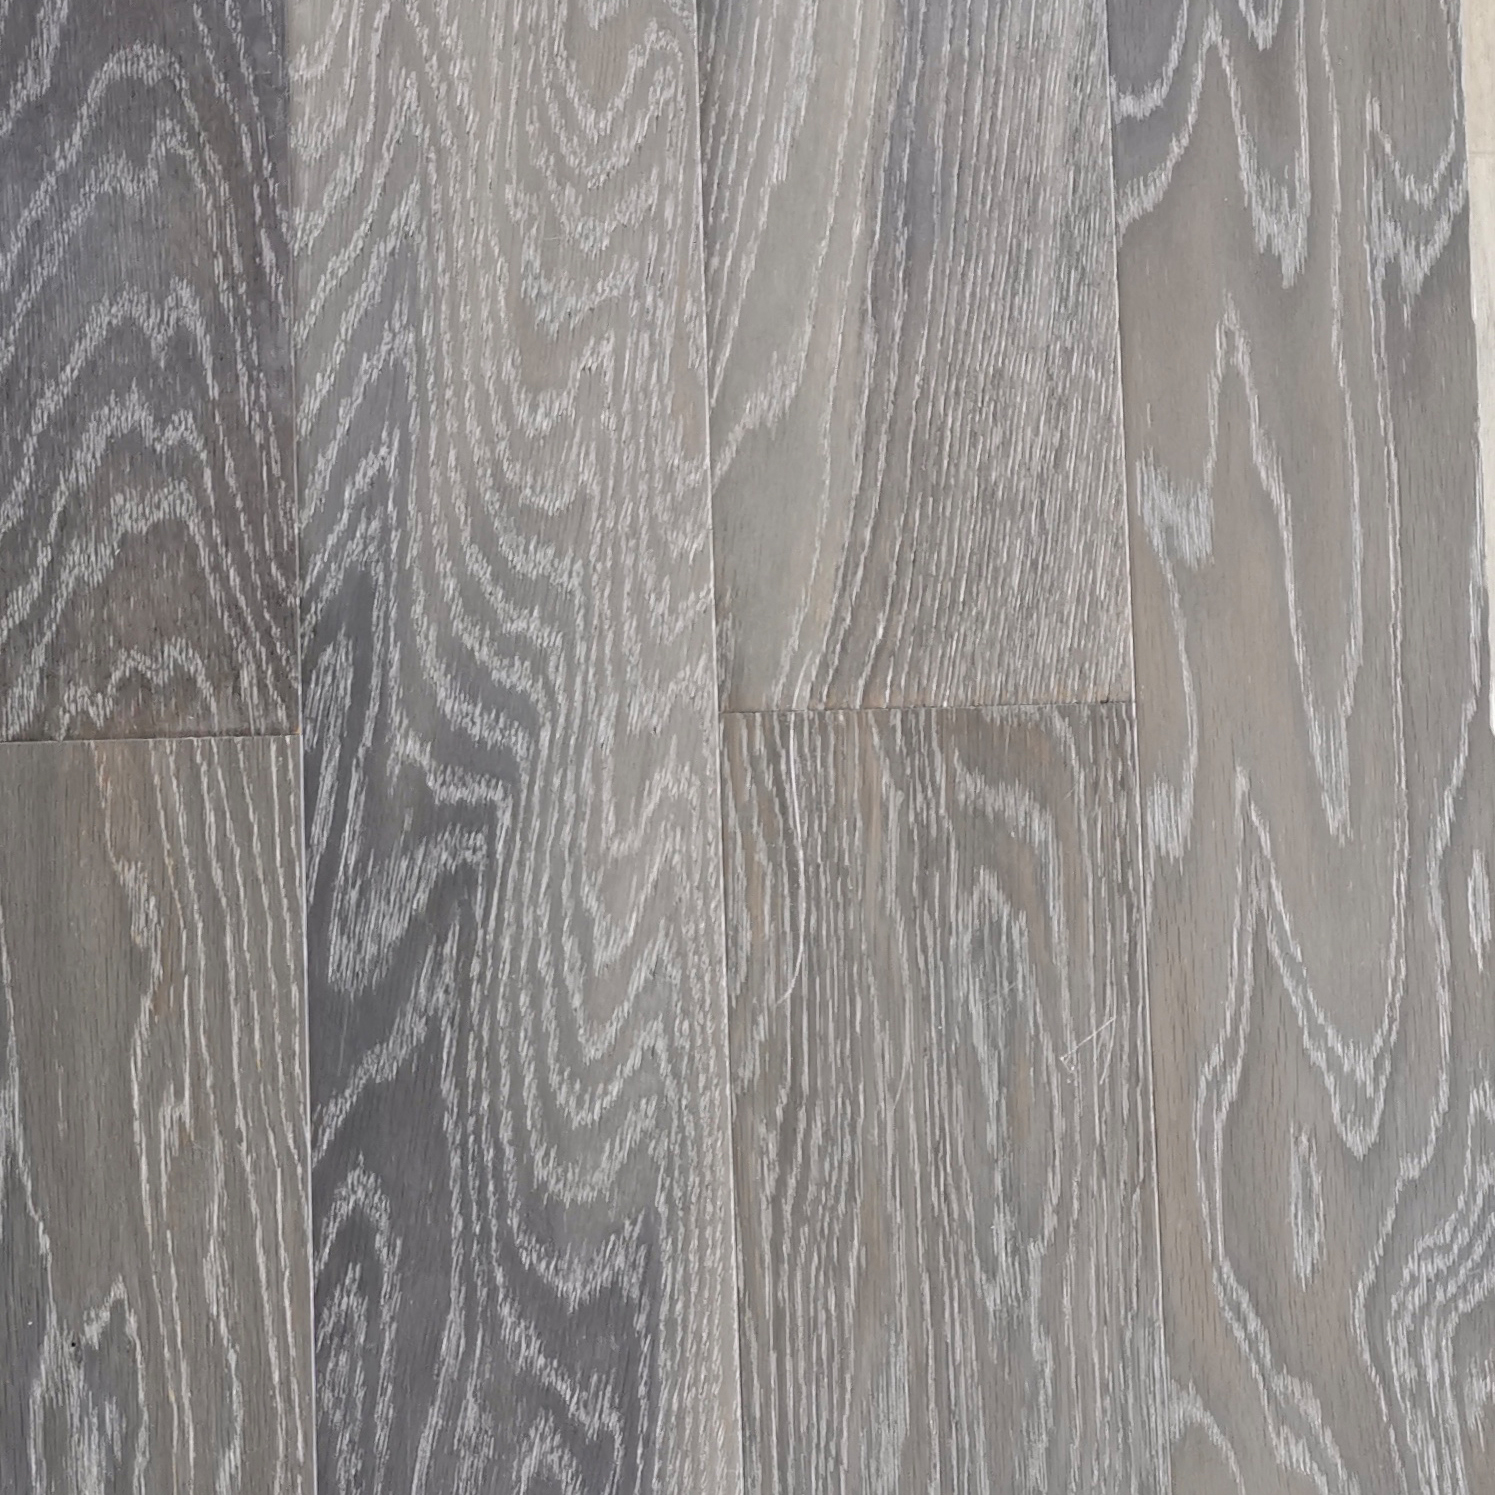 2020 New Style Wpc Decking Grey -
 Kangton New Innovation Oak Timber Wood Veneer SPC Flooring – Kangton